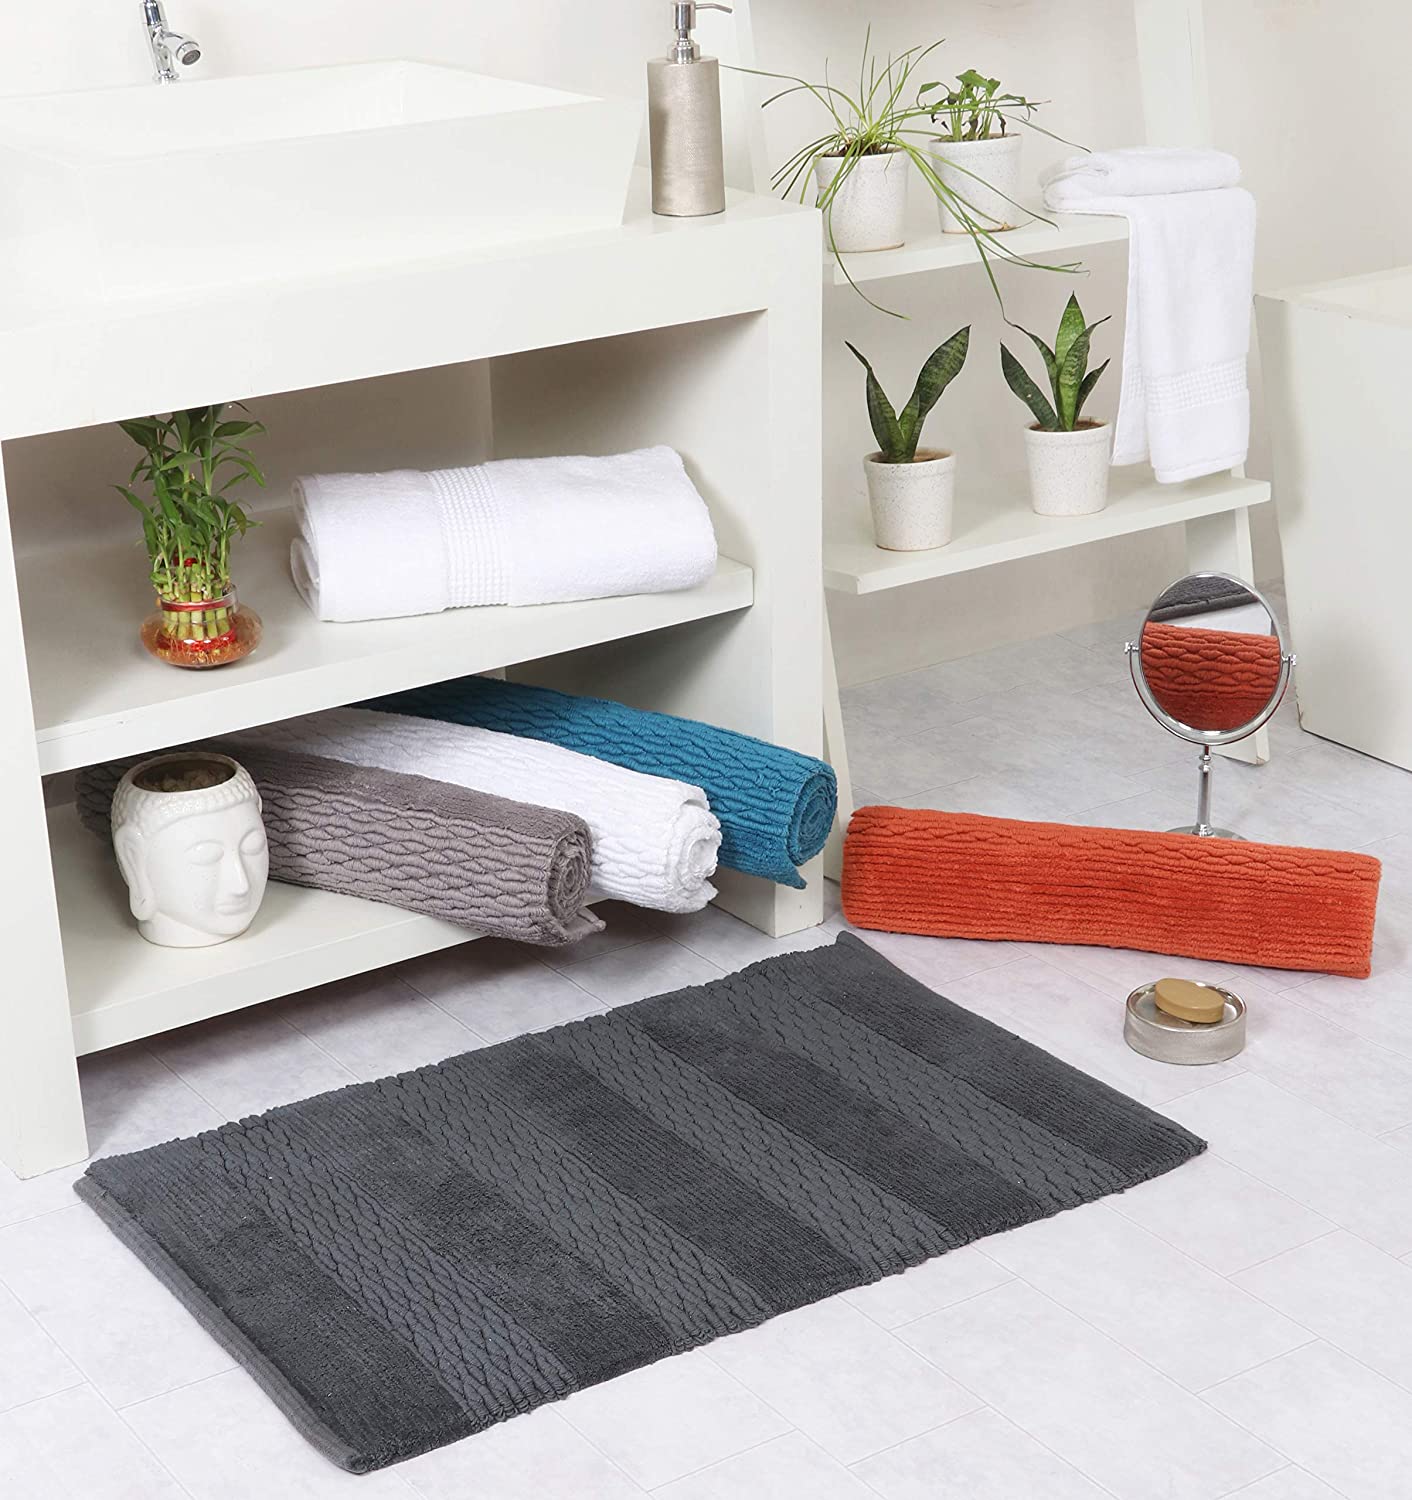 Cotton bath rugs water absorbent stripe design bathmat set of 2 - TreeWool Bathrugs#color_charcoal